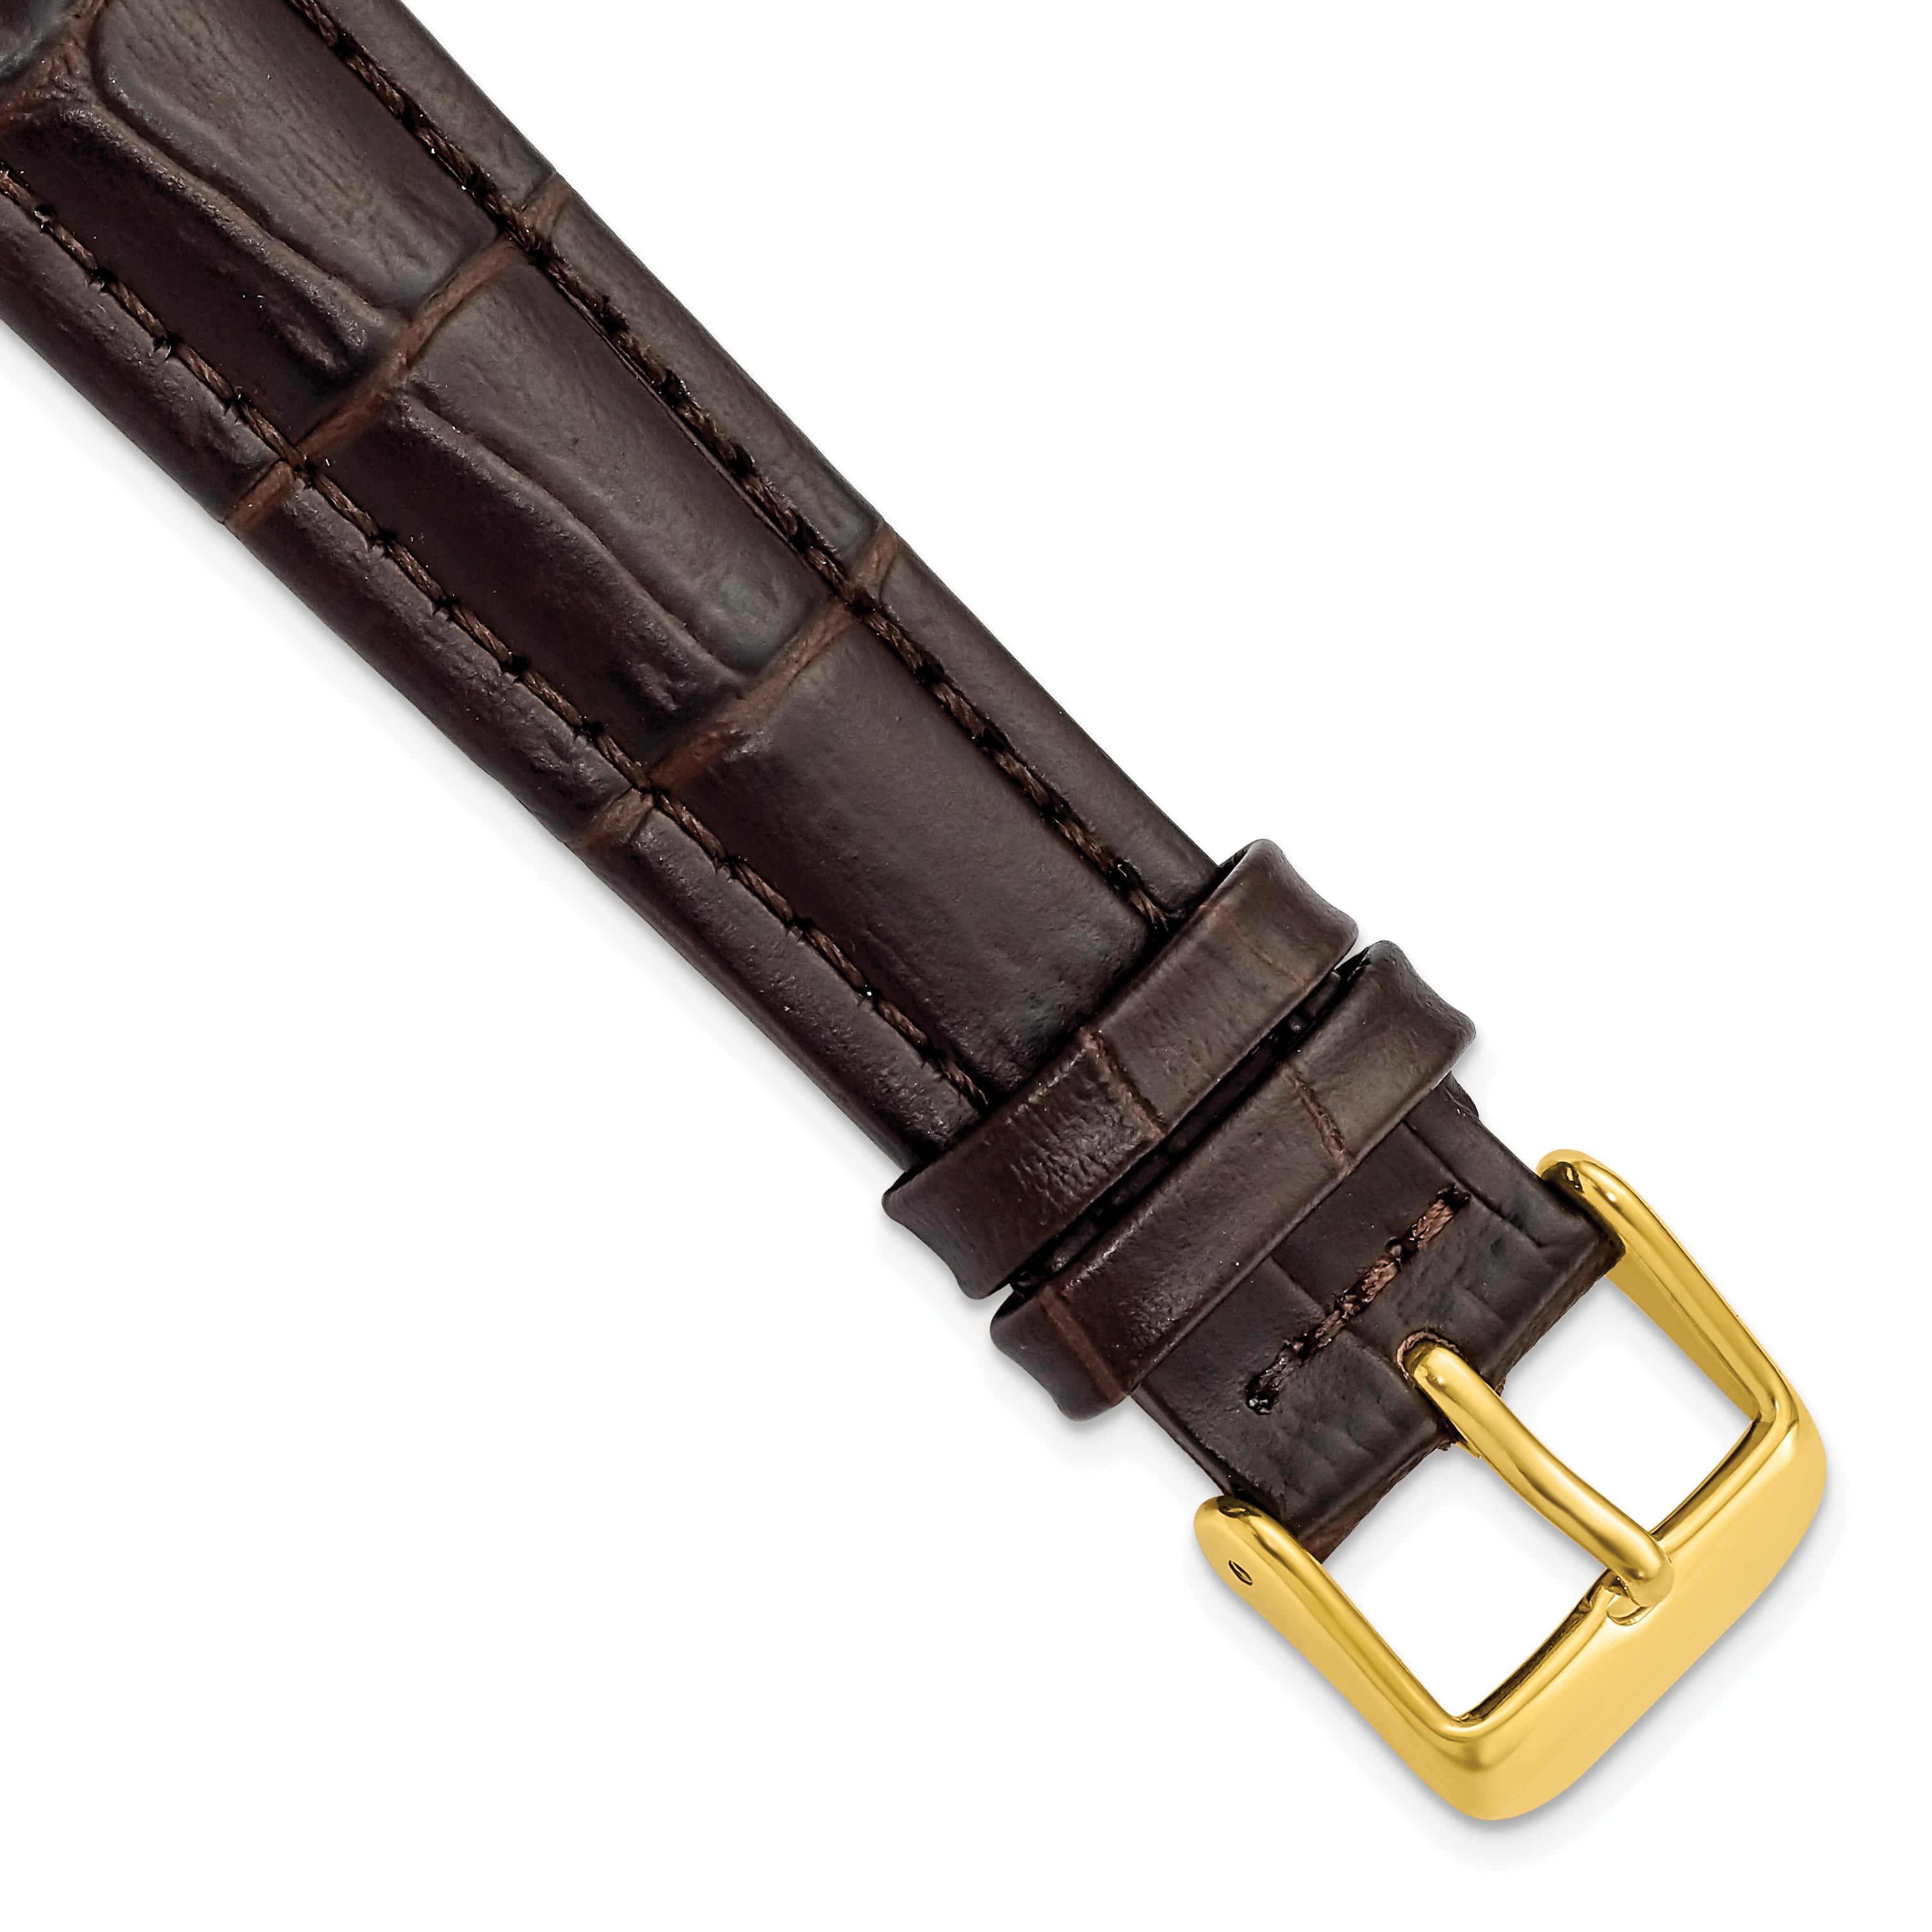 DeBeer 19mm Dark Brown Matte Alligator Grain Leather with Gold-tone Buckle 7.5 inch Watch Band